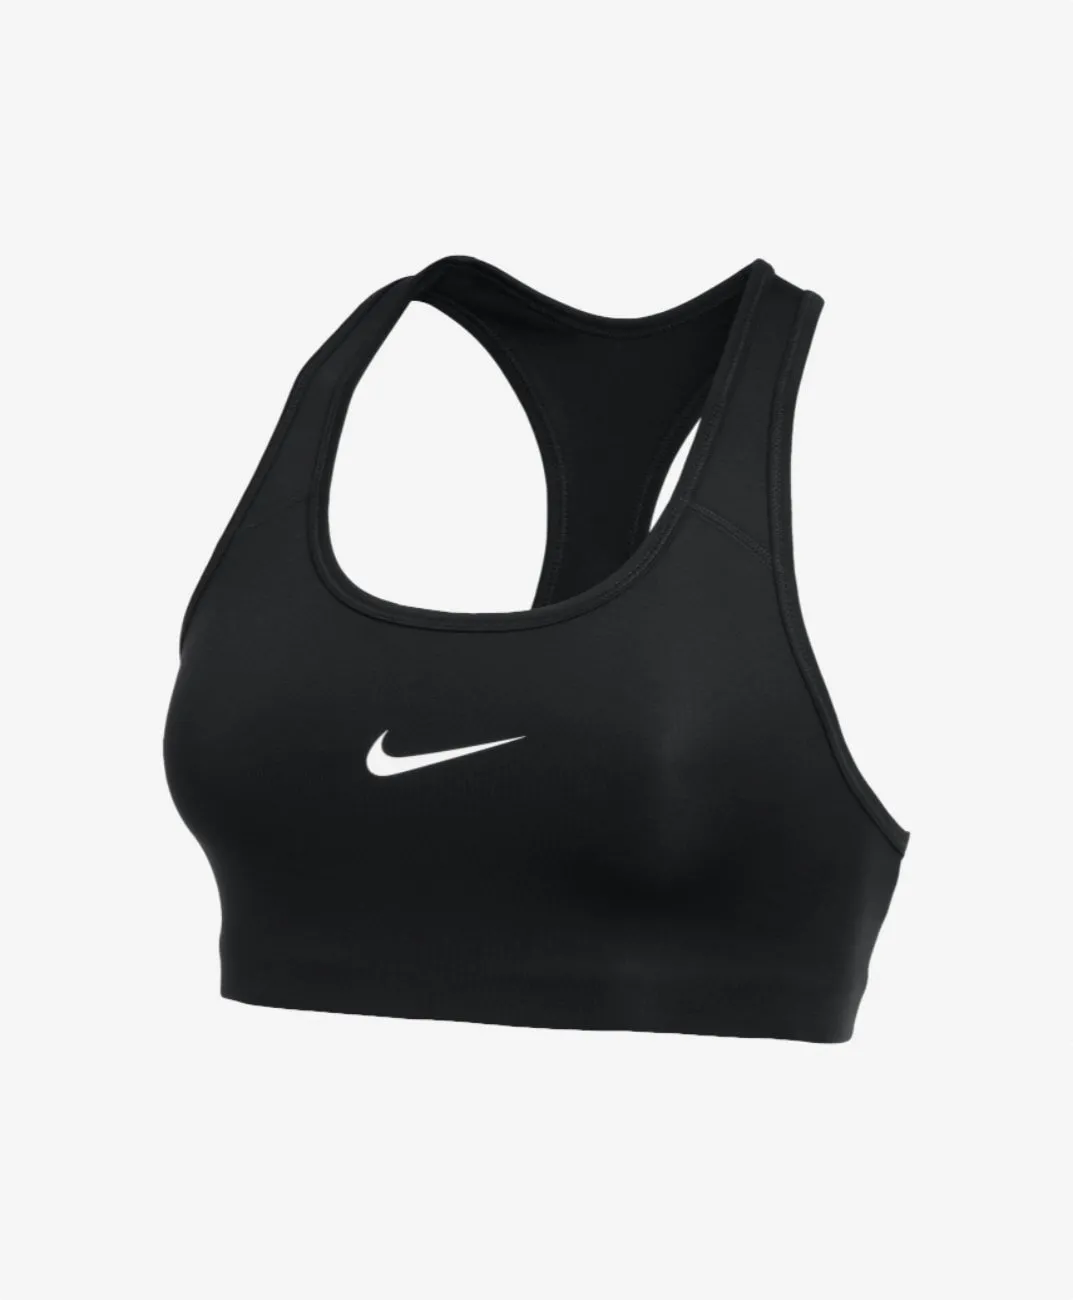 Спортивный топ Nike Swoosh Dri-FIT CJ5949-010 - купить в интернет-магазине